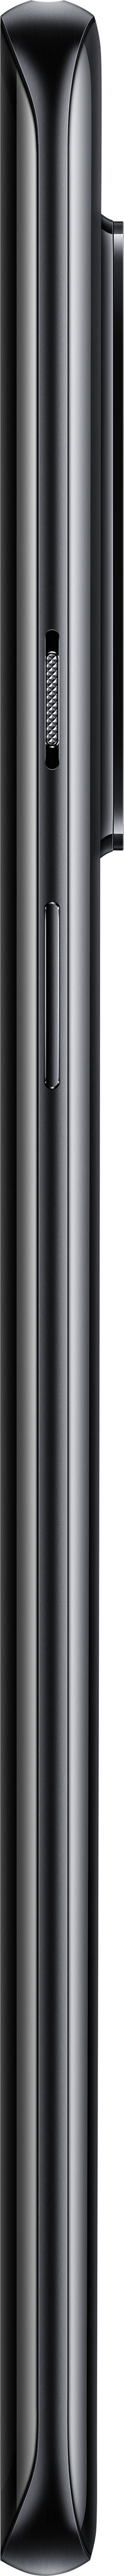 OnePlus 8 Pro 128GB Dobbelt-SIM Onykssvart